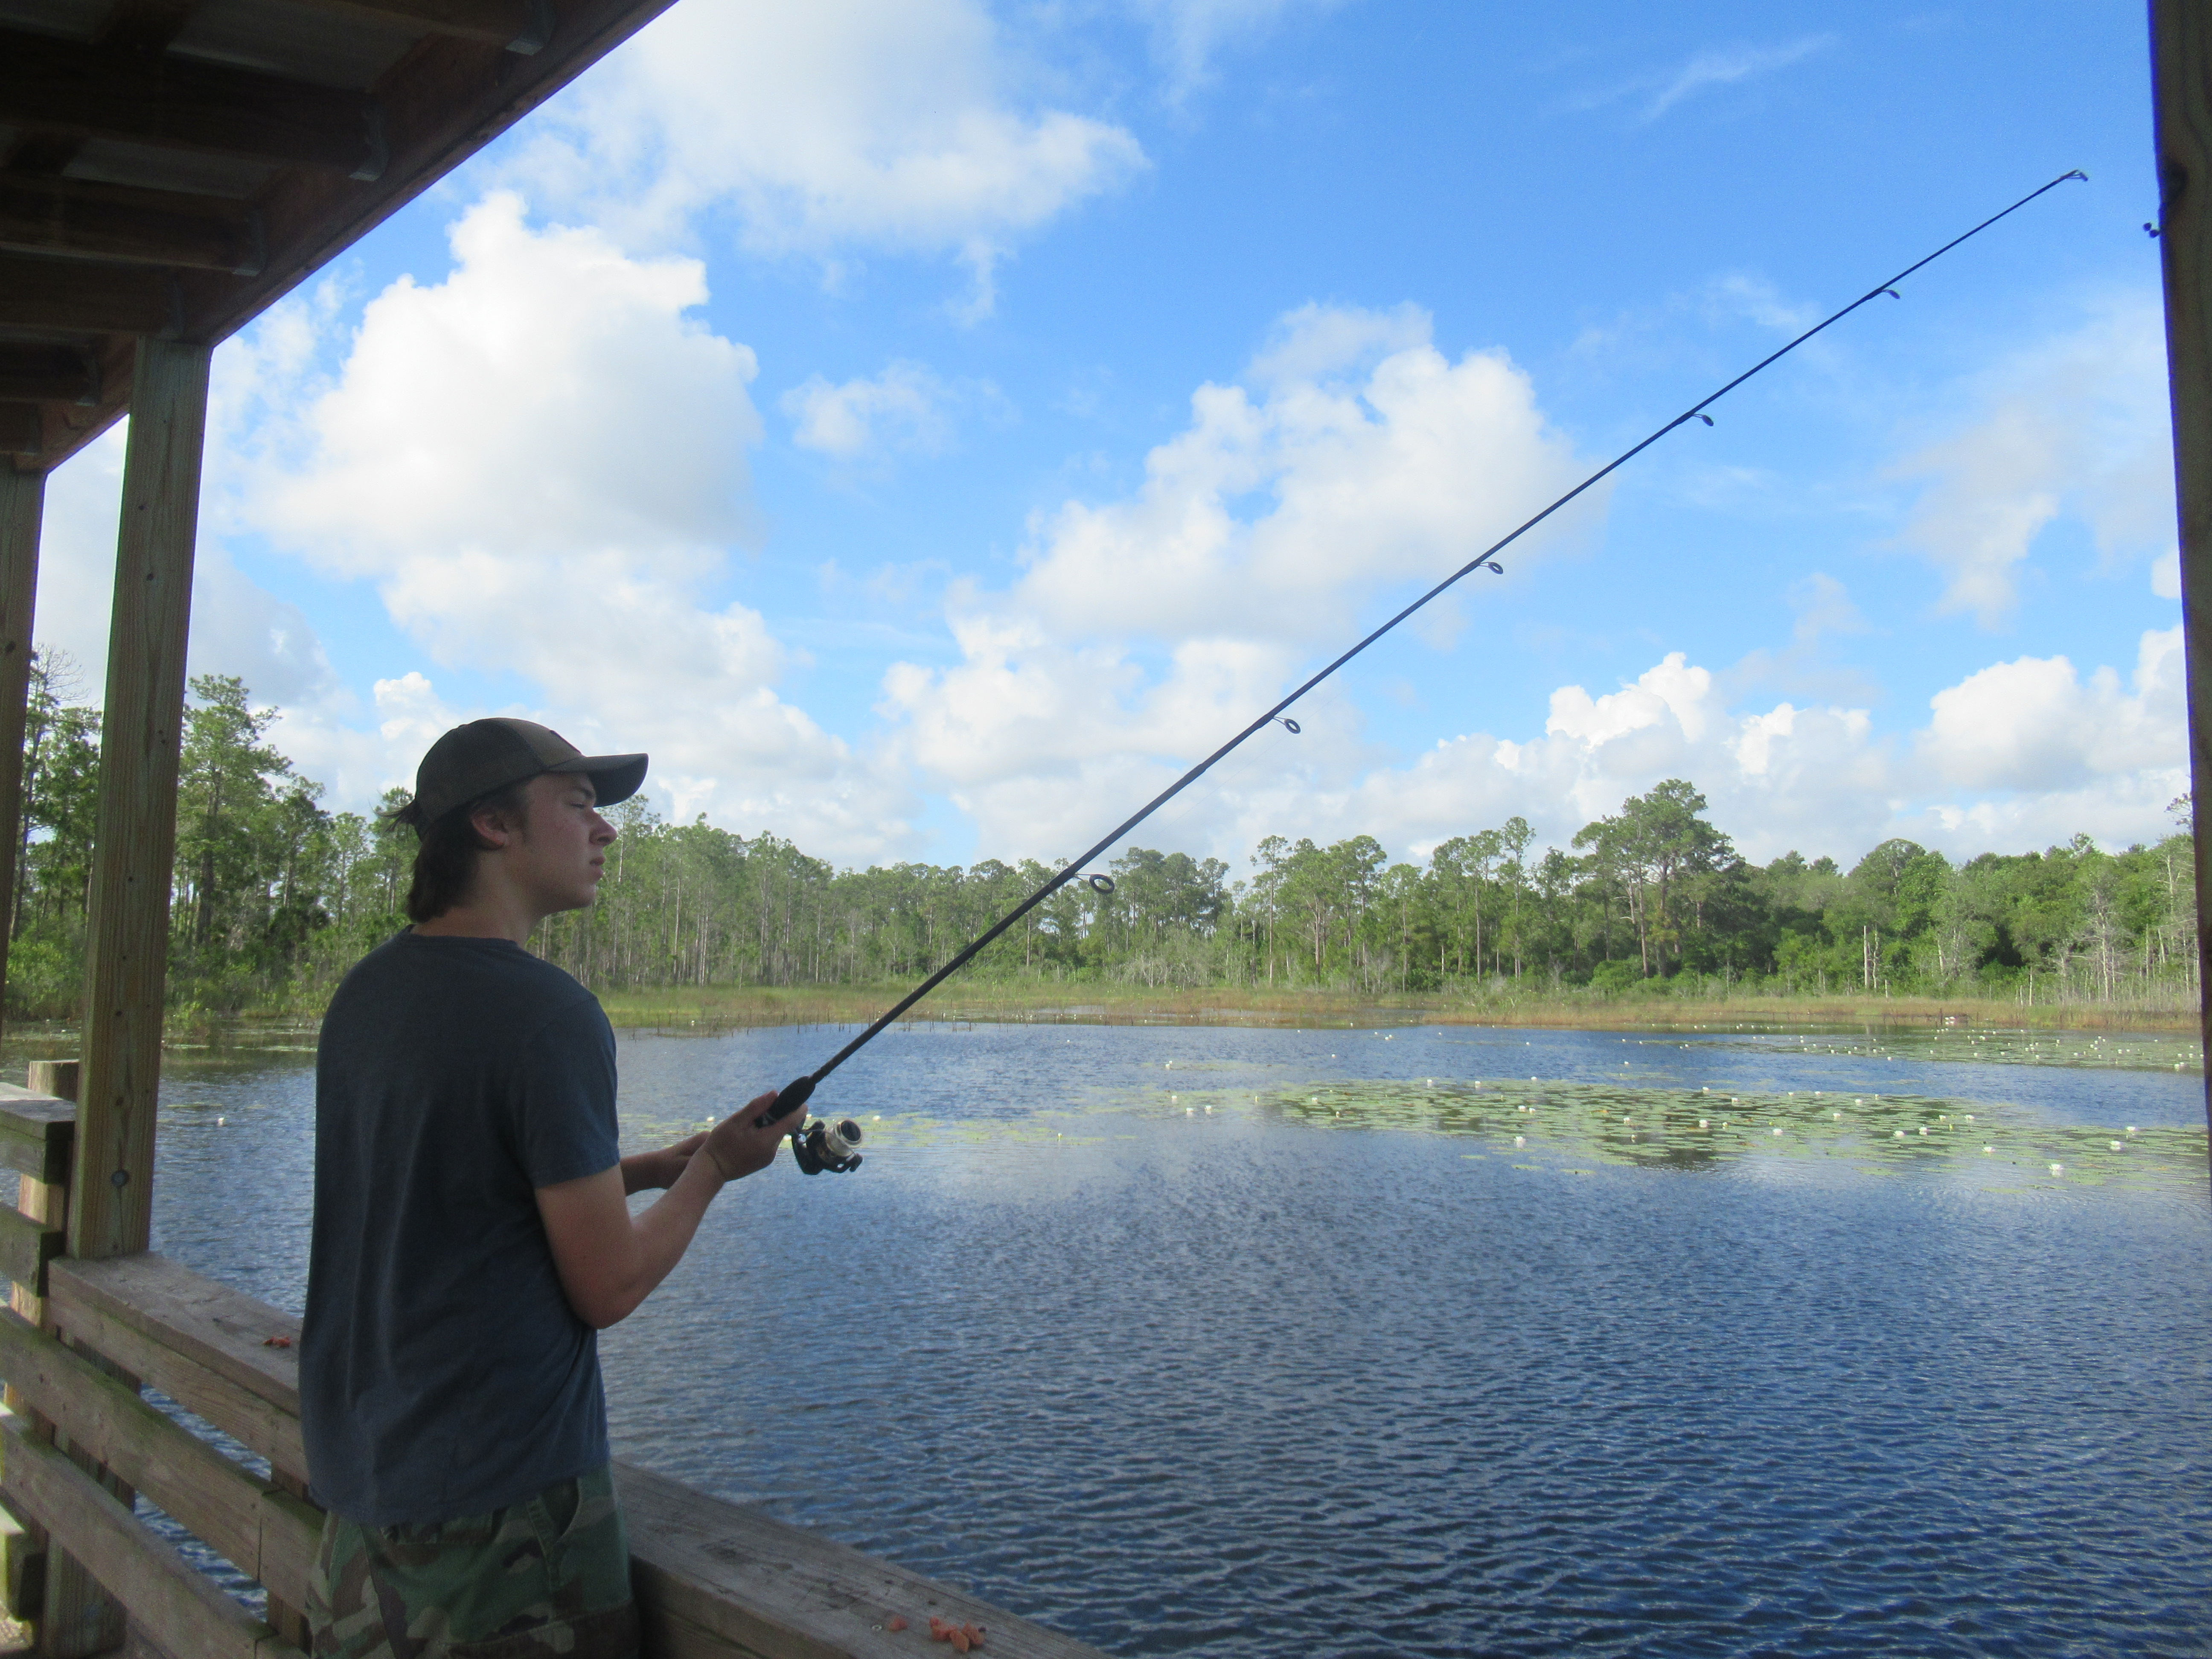 teen boy fishing on a dock